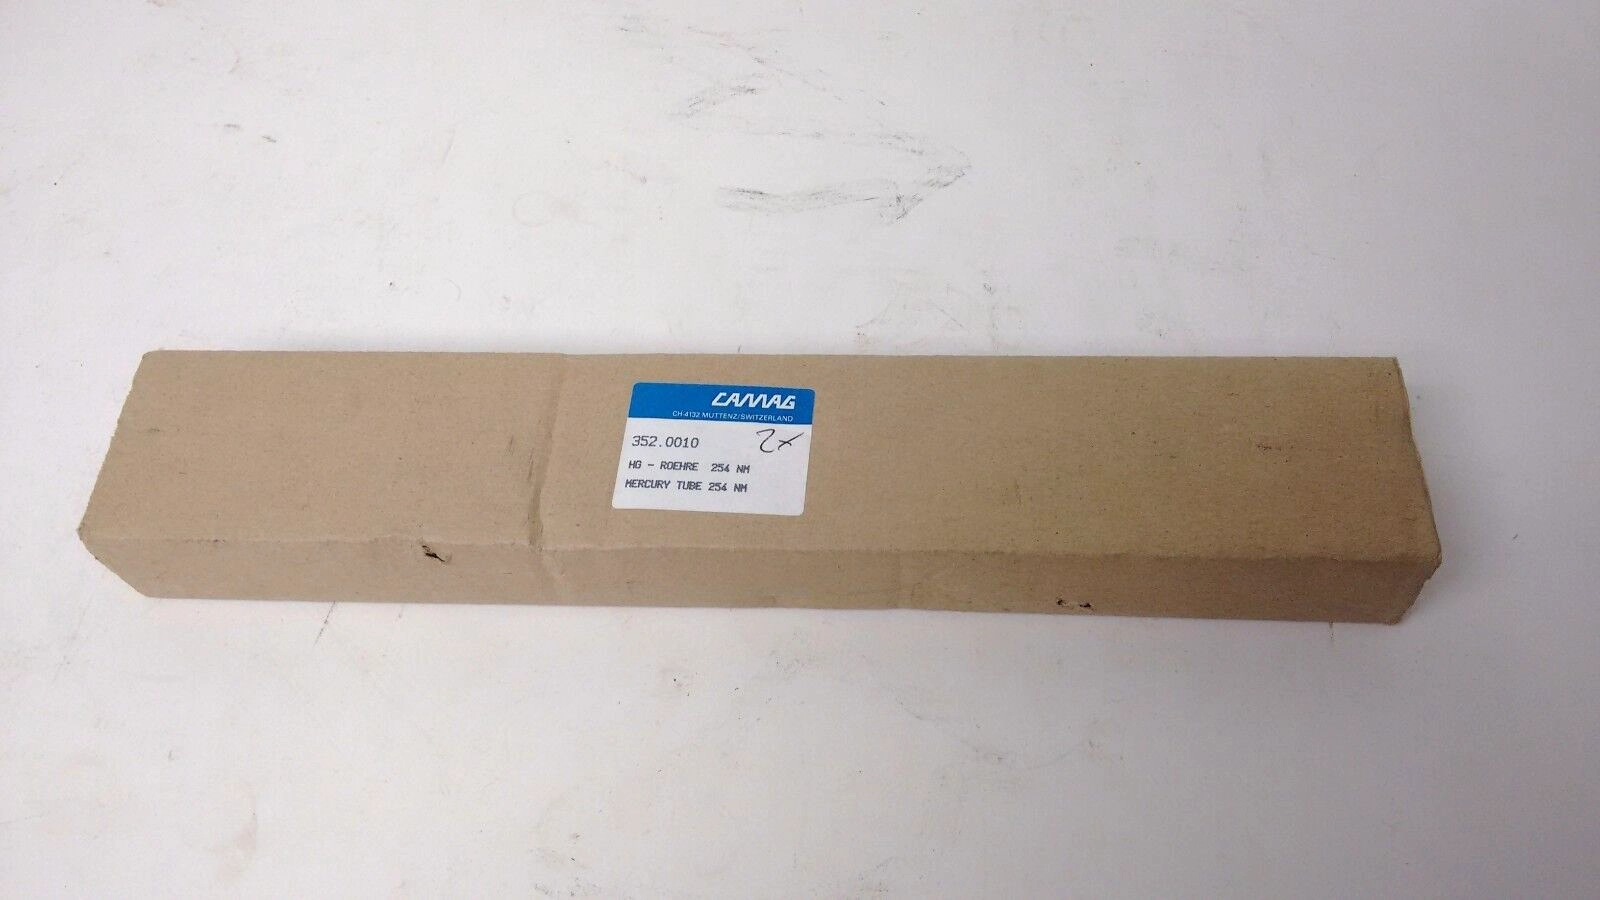 Box of 2 Camag 352.0010 HG - Roehre 254 NM Mercury